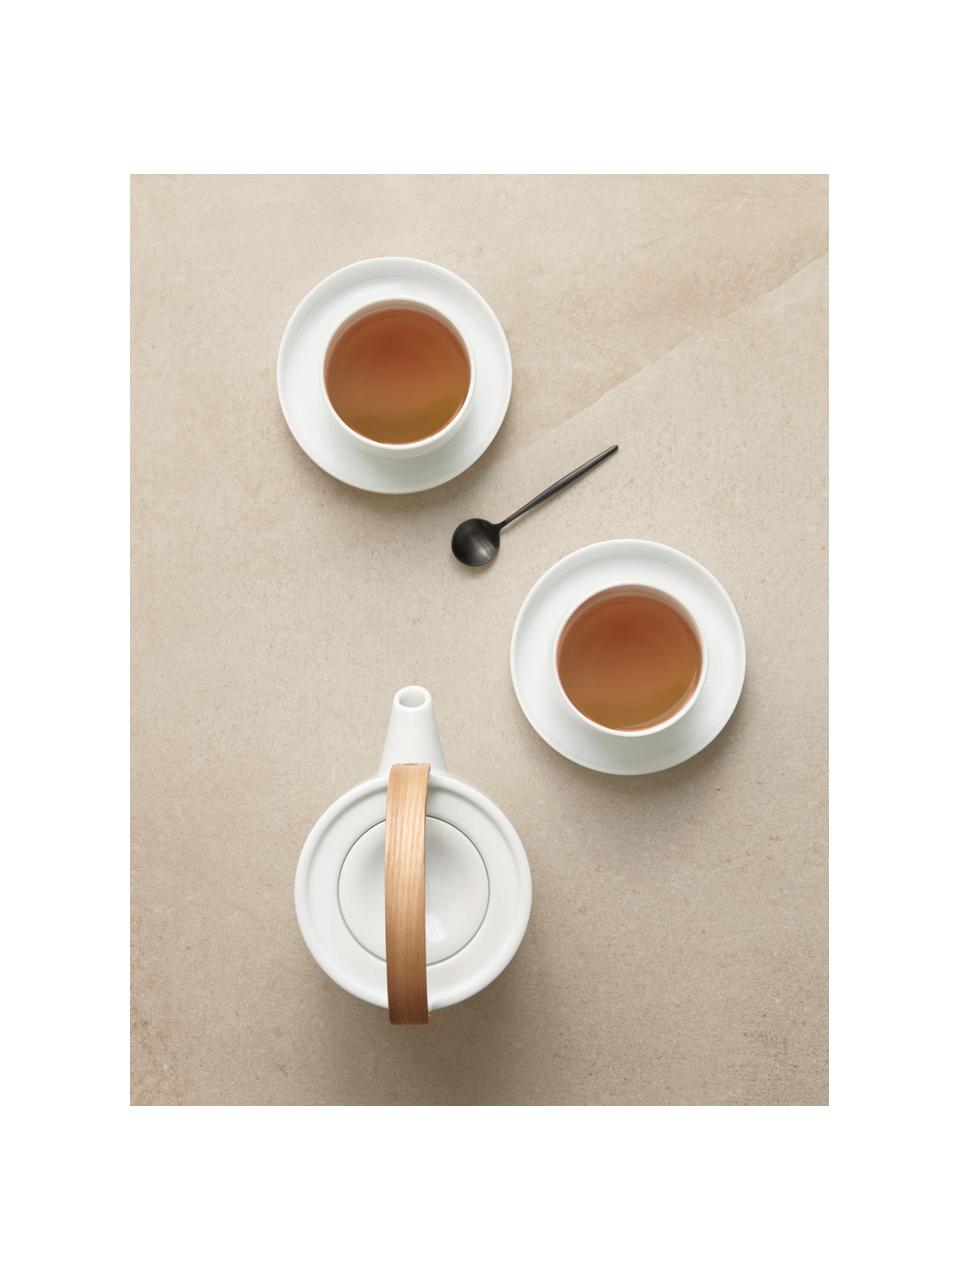 Teekanne Coppa sencha aus Porzellan mit Holzgriff, 1 L, Kanne: Porzellan, Griff: Holz, Weiß, 1 L